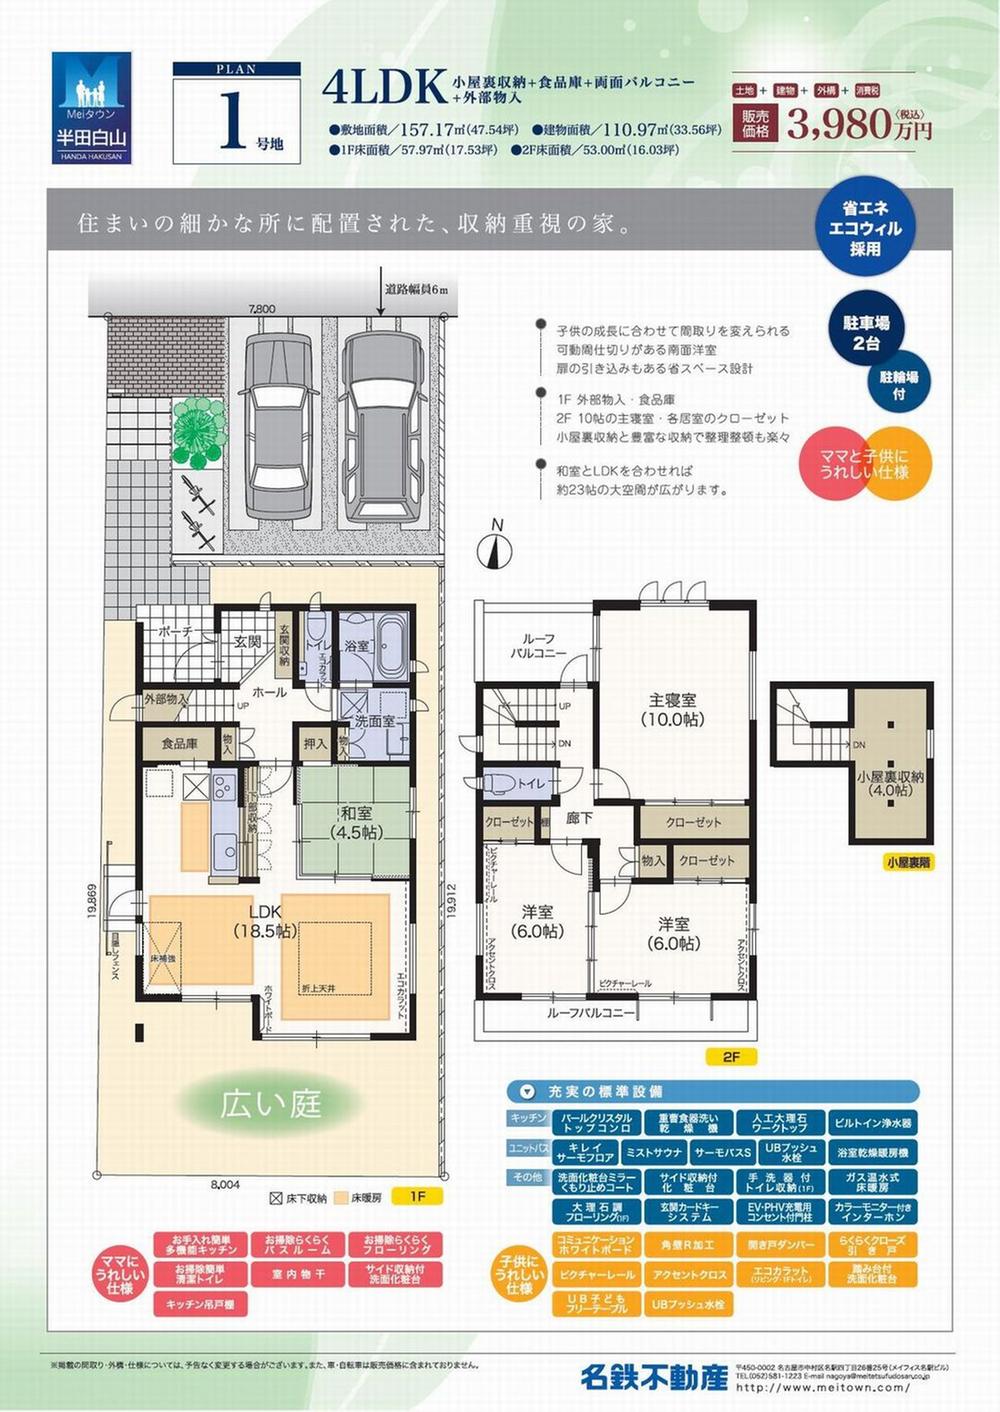 Floor plan. (No. 1 point), Price 39,800,000 yen, 4LDK, Land area 157.17 sq m , Building area 110.97 sq m